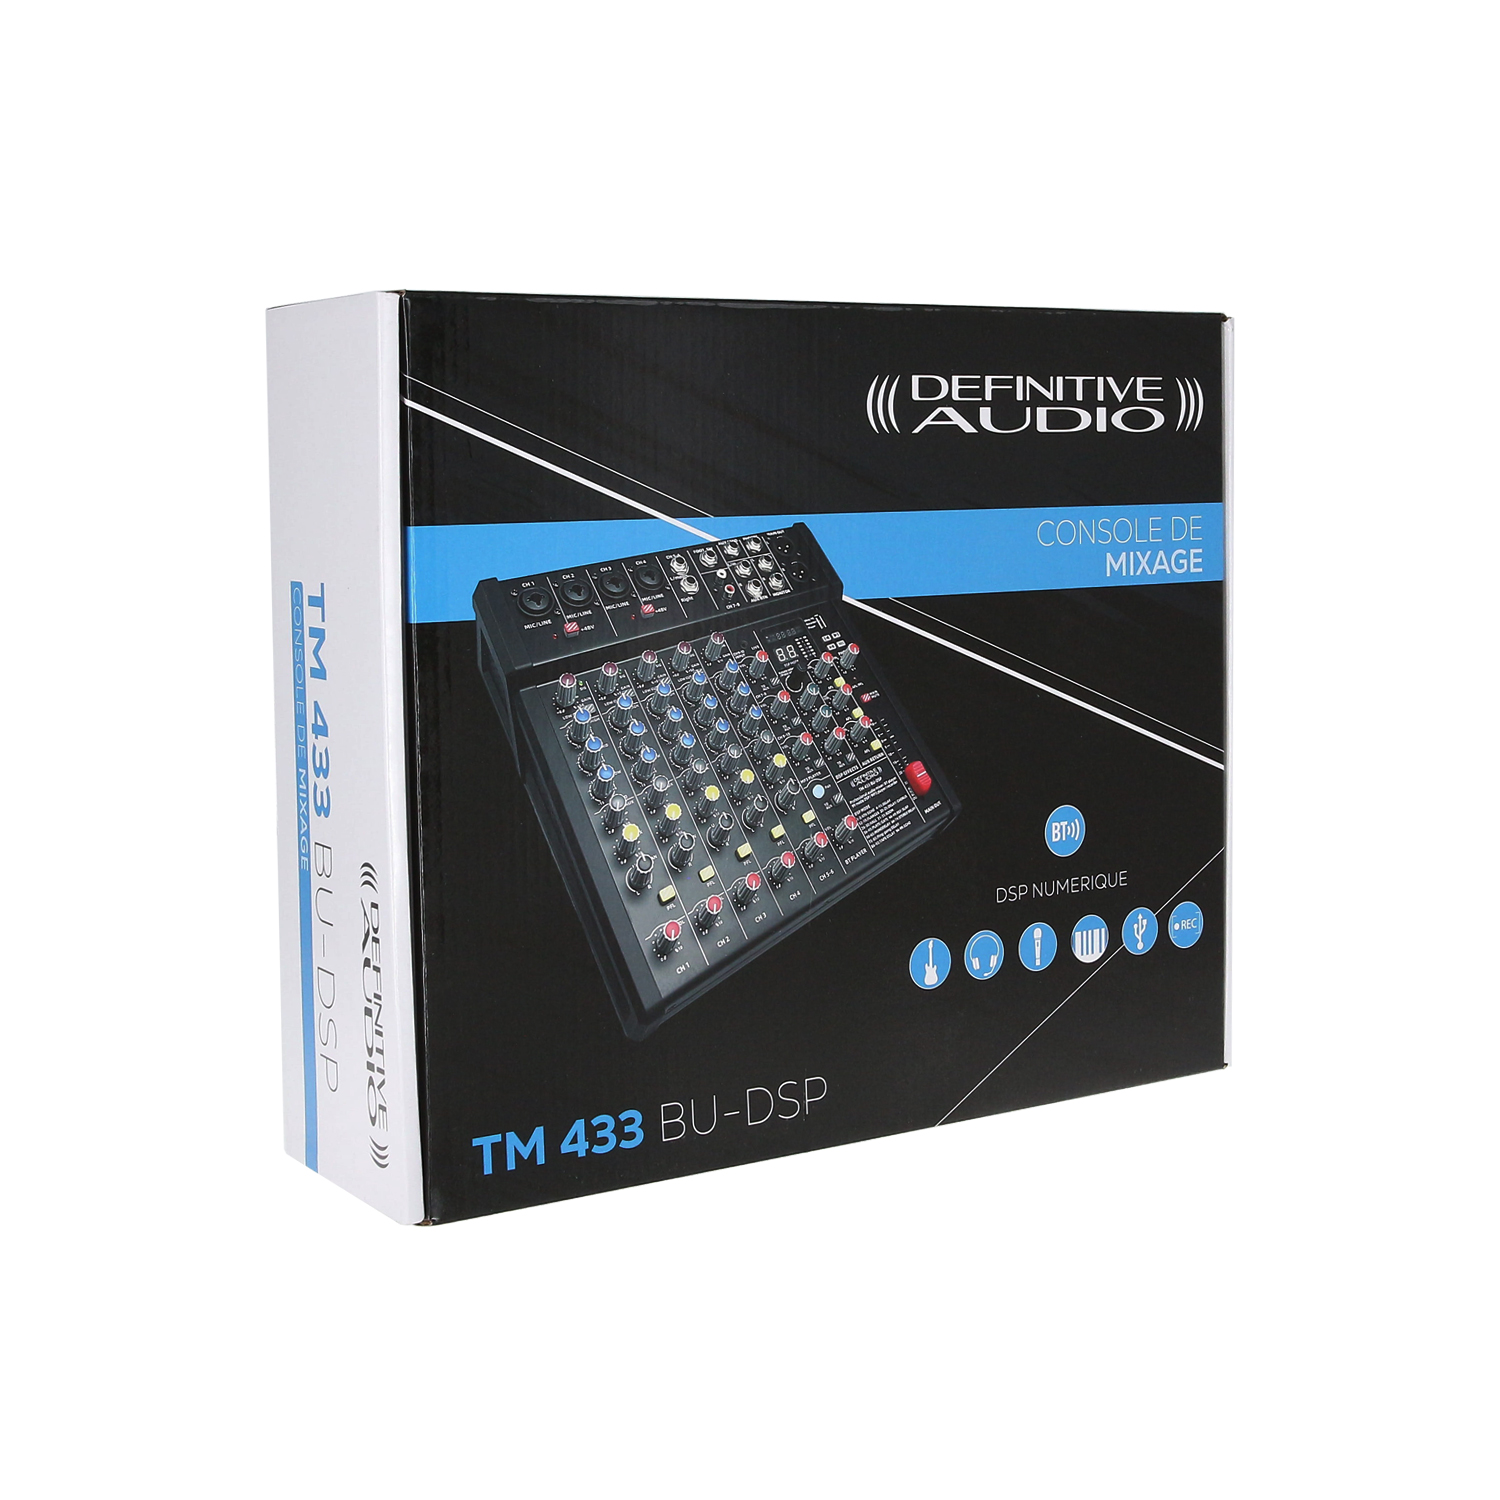 Definitive Audio Tm 433 Bu-dsp - Analog mixing desk - Variation 4